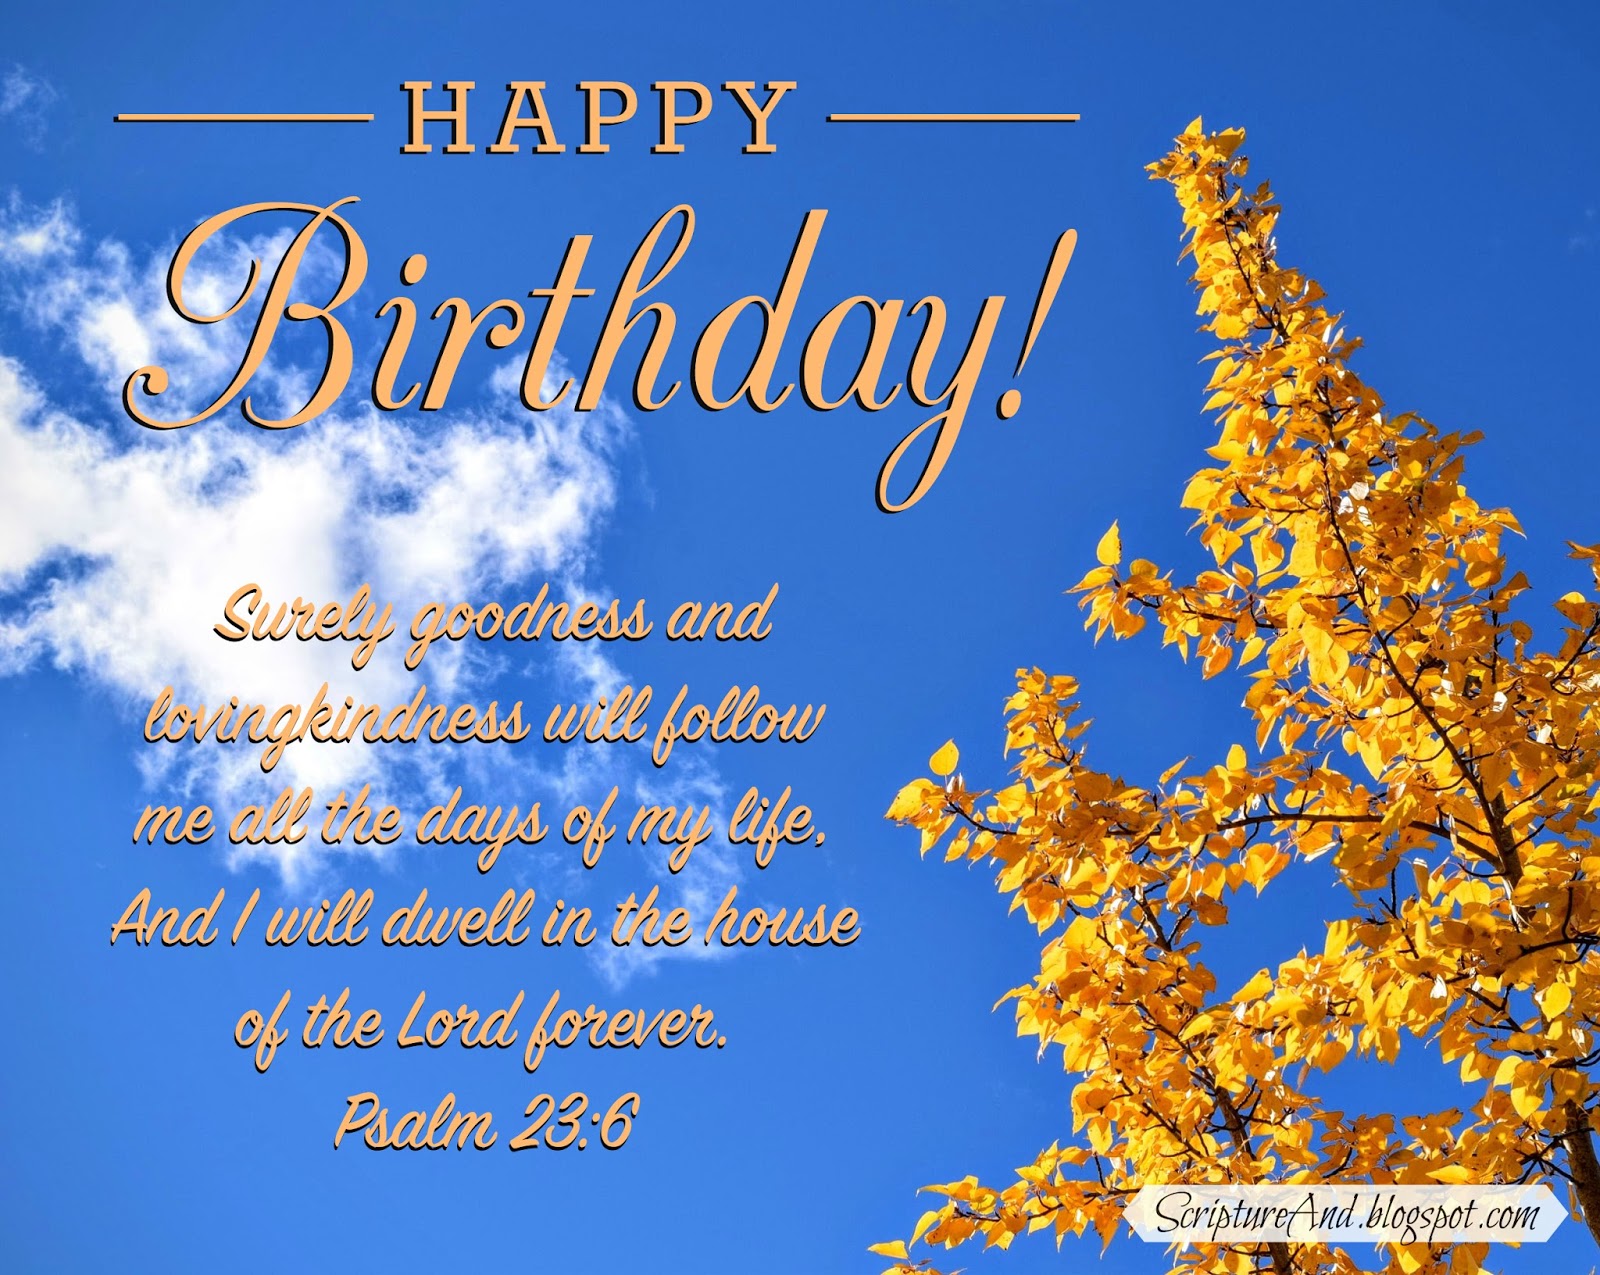 Free Birthday Image with Bible Verses